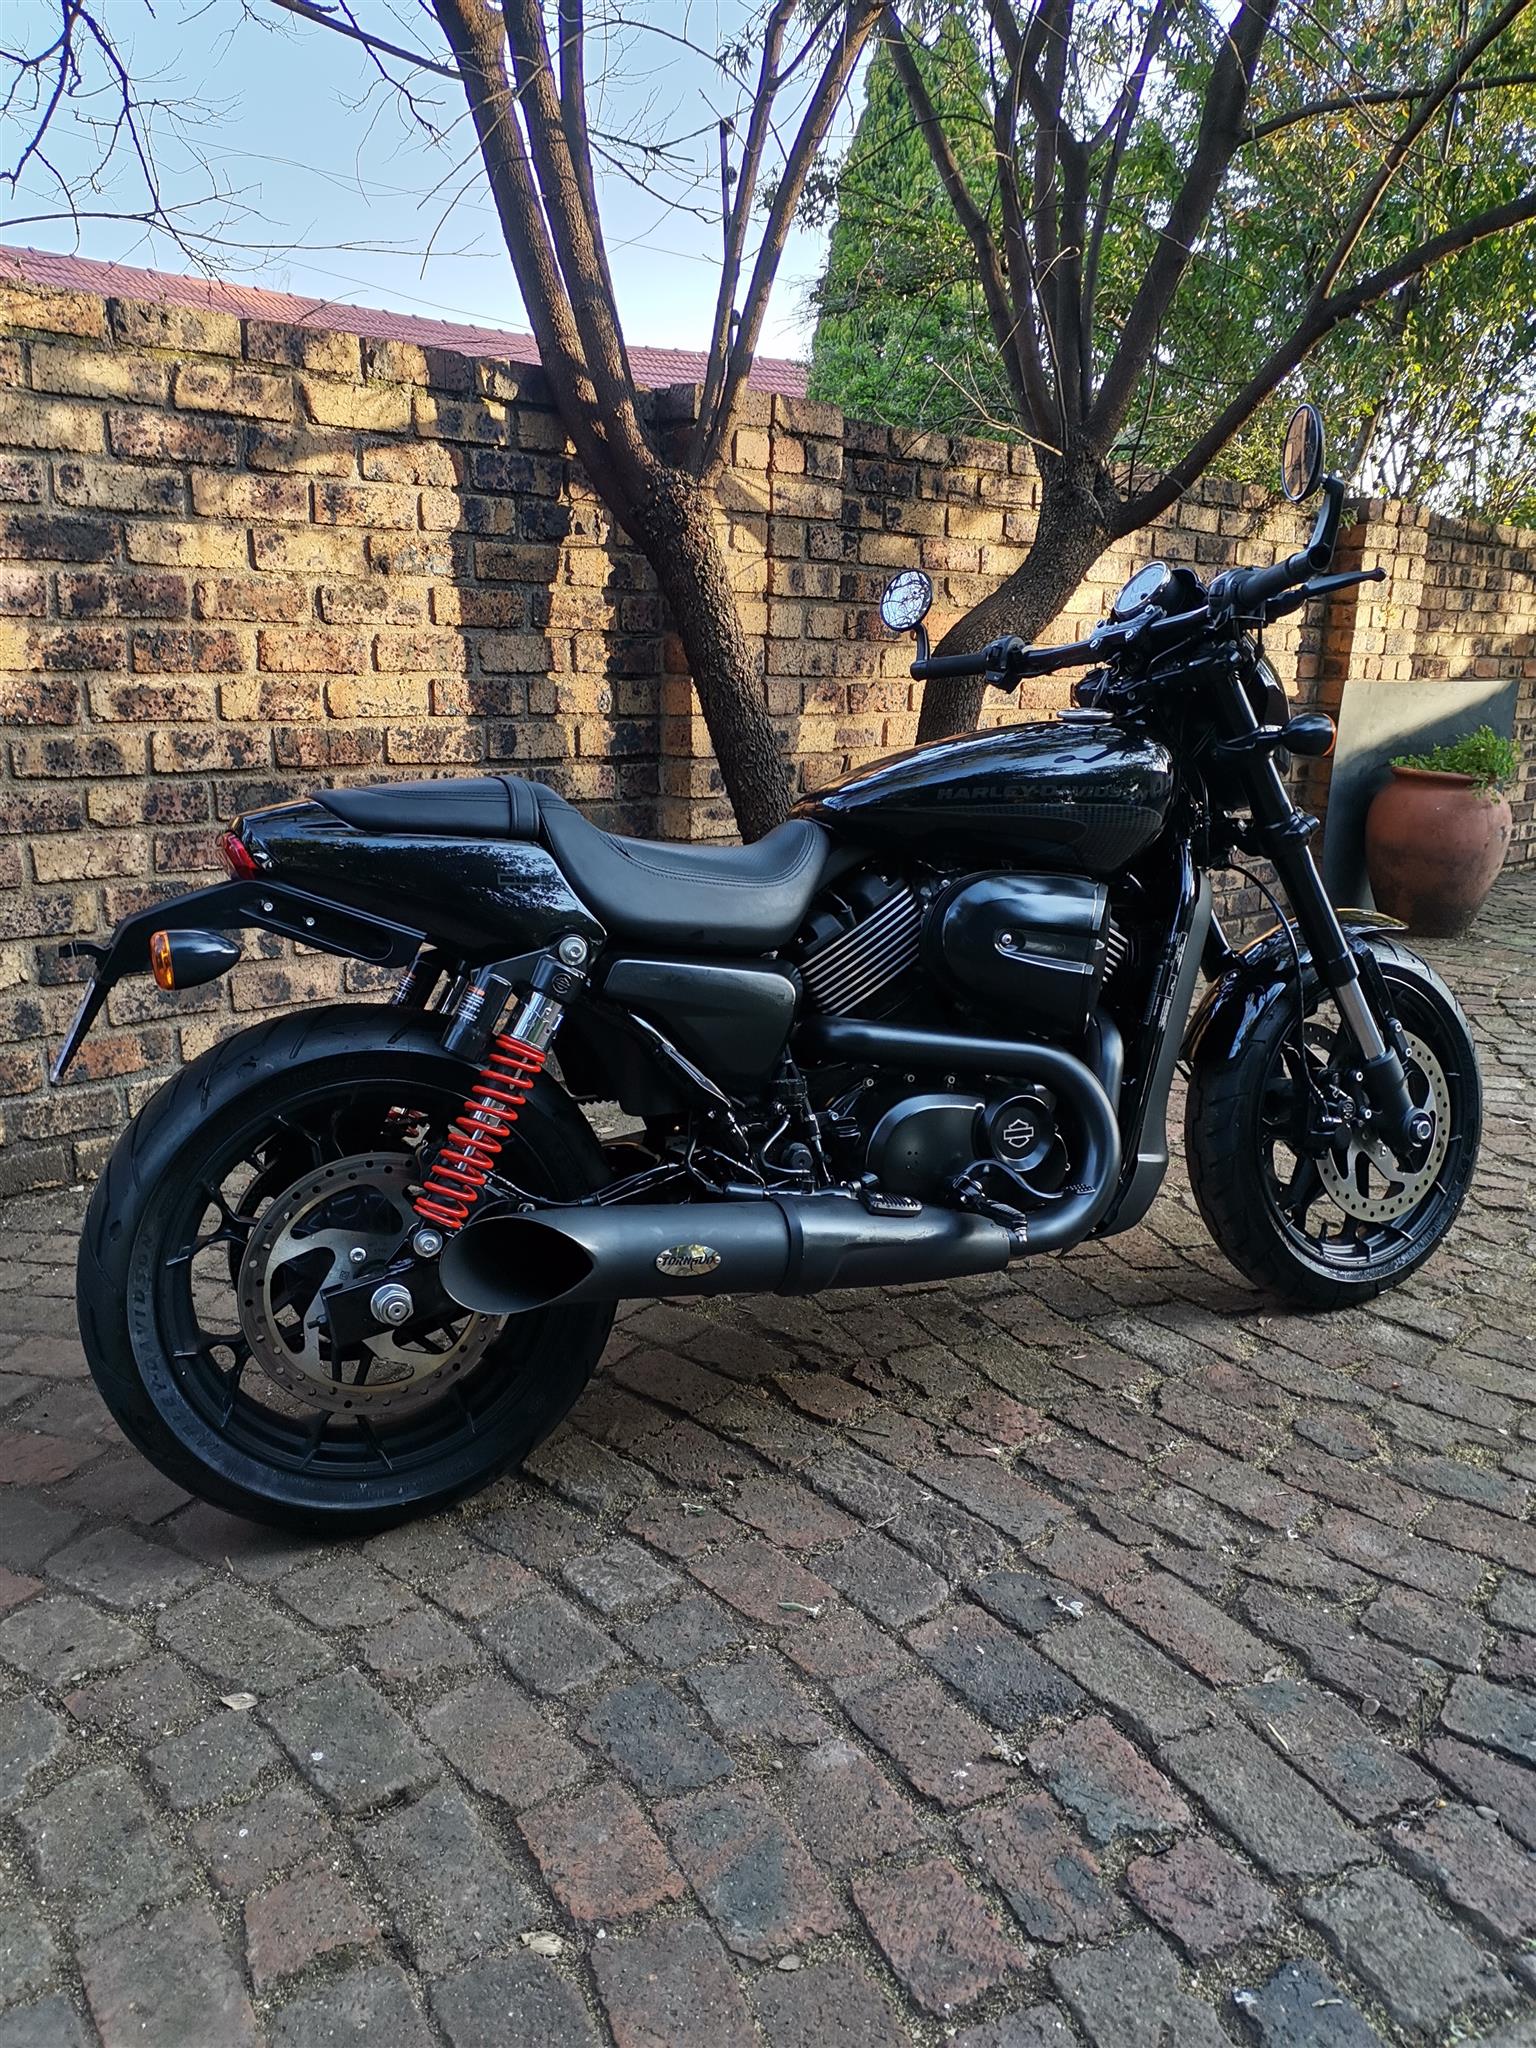 2020 Harley Street 750. Tags- Yamaha r1 883 Suzuki gsx Honda cbr 1000 Ducati